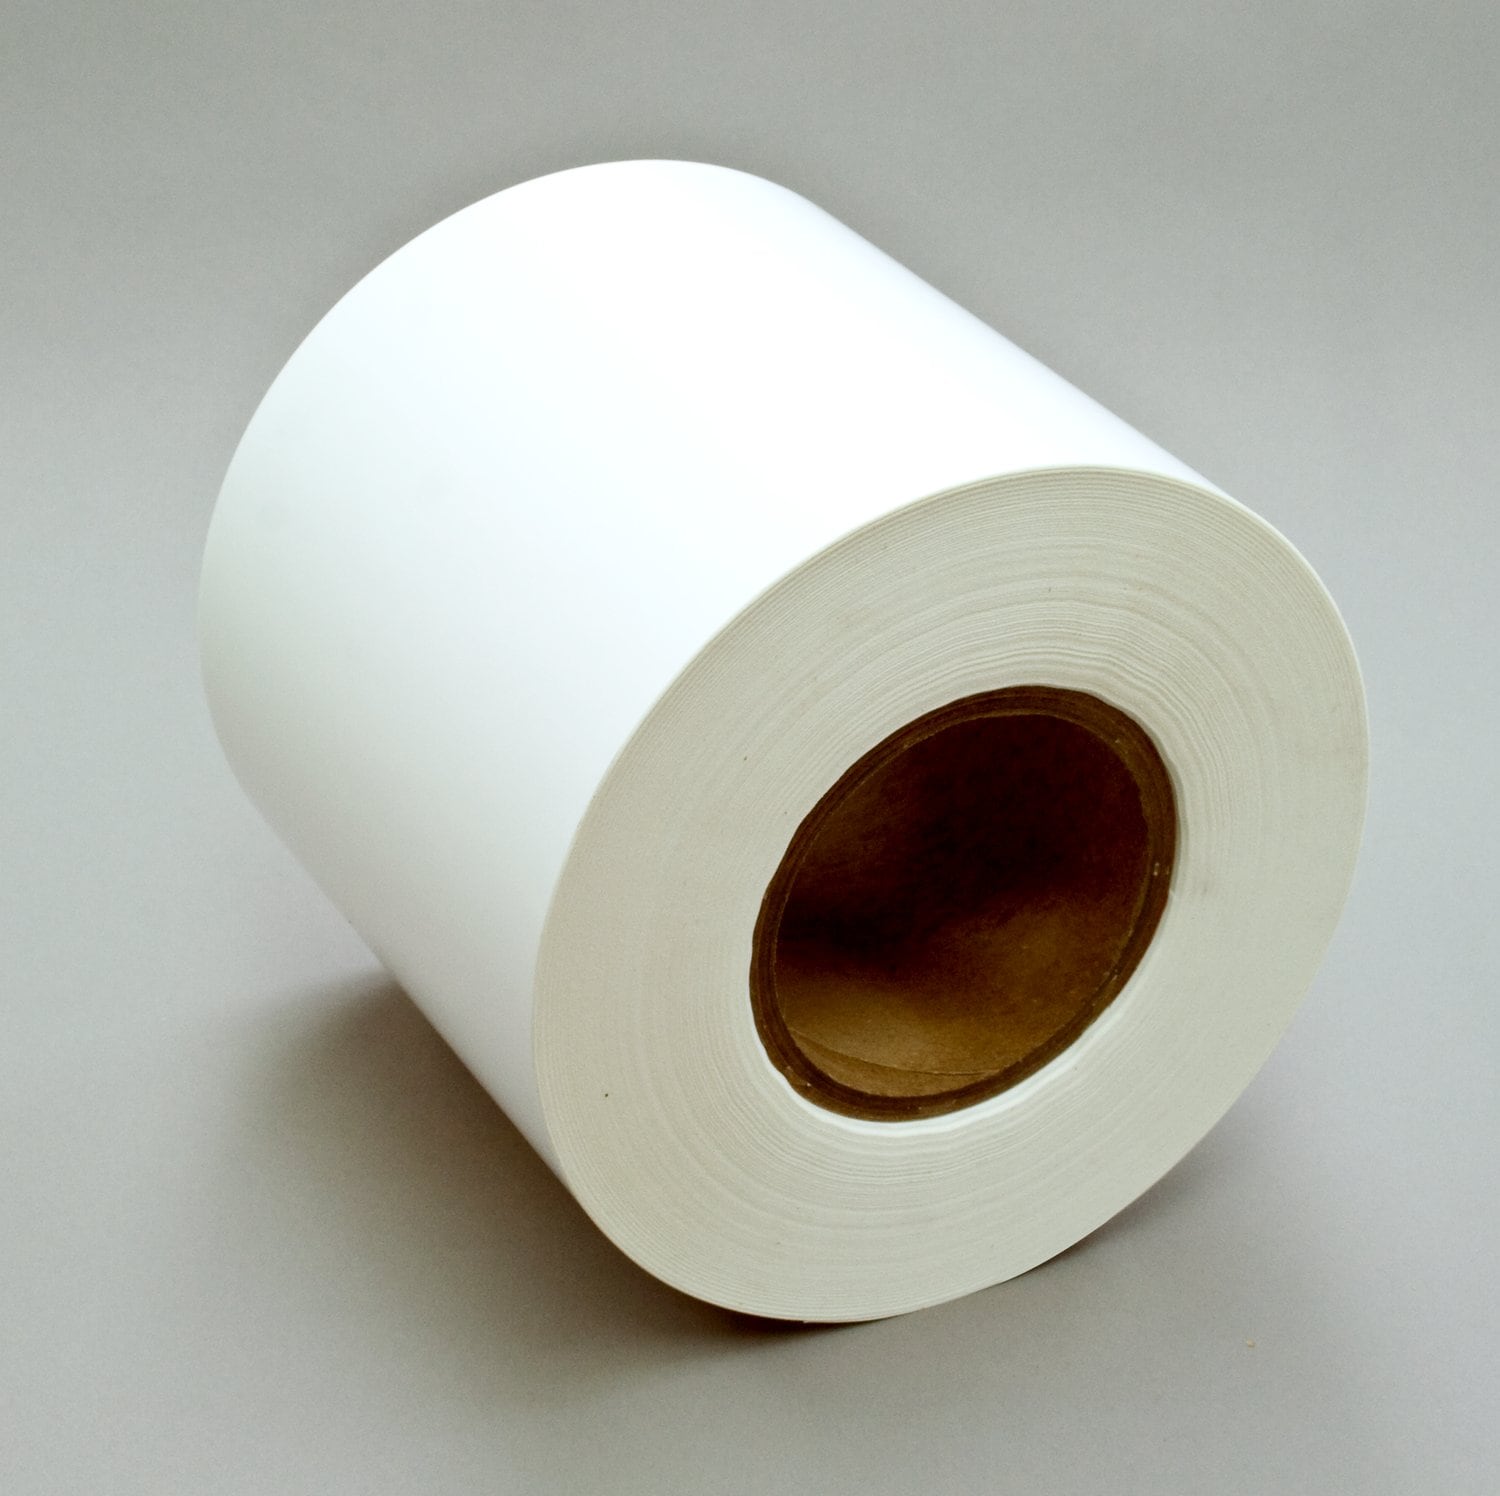 7100073790 - 3M Press Printable Label Material FPE06602, White Polyethylene, Roll,
Config